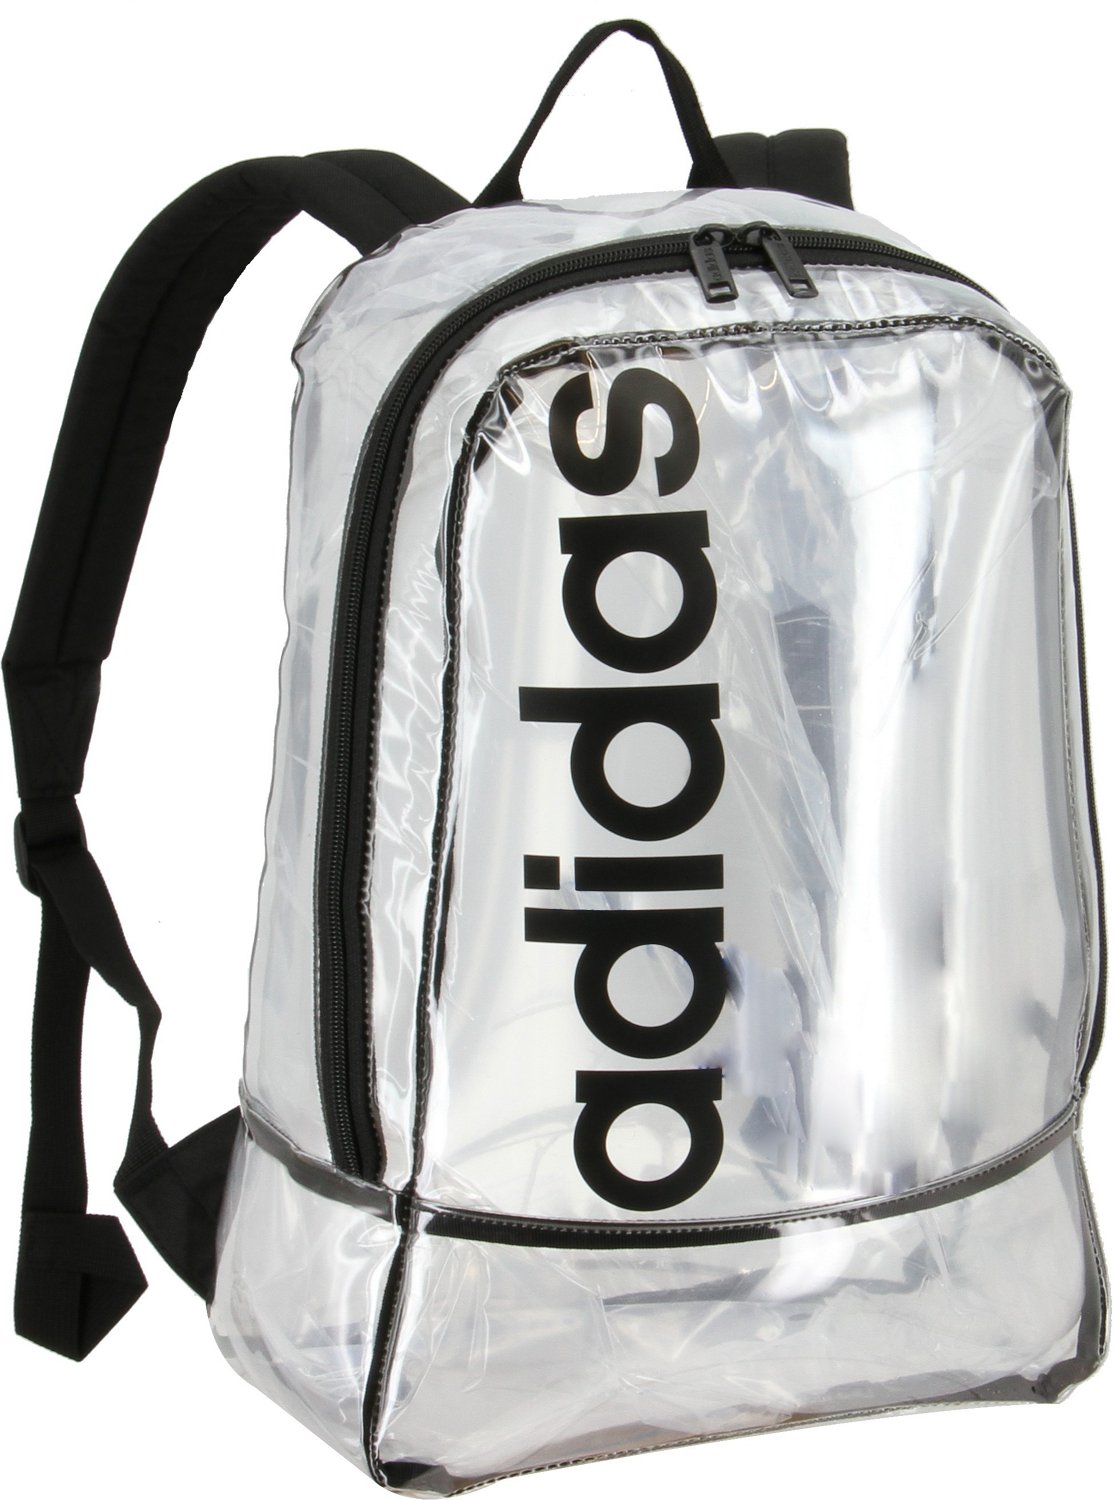 adidas backpack academy sports